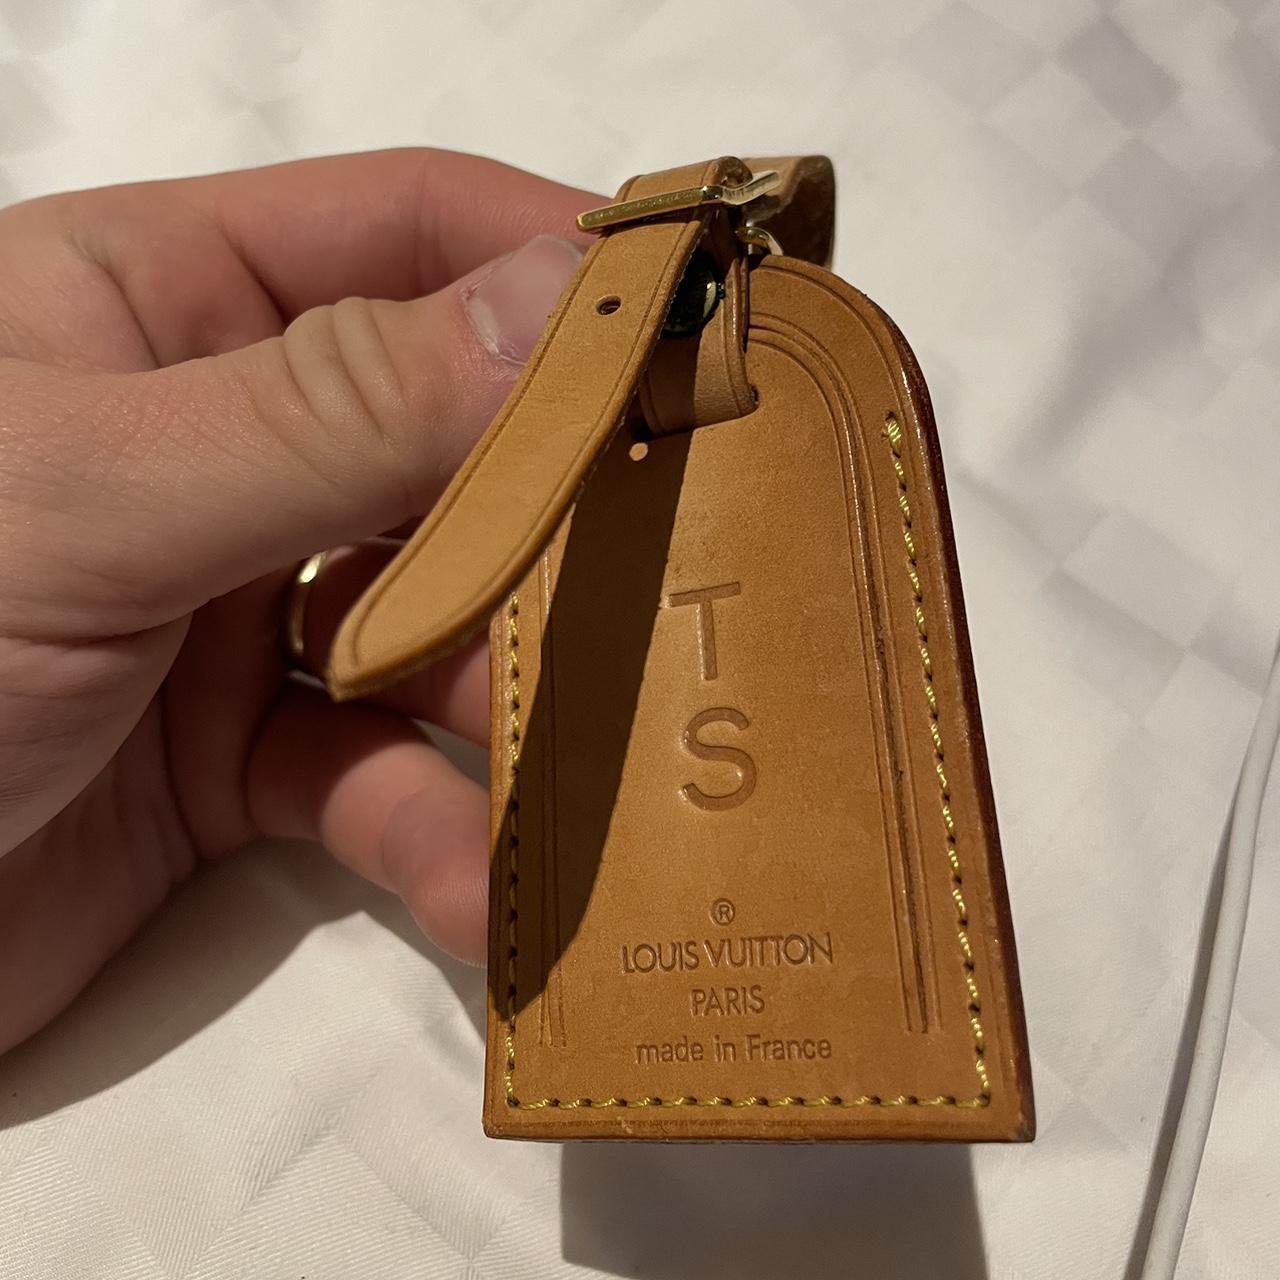 Authentic Handmade Louis Vuitton - Depop